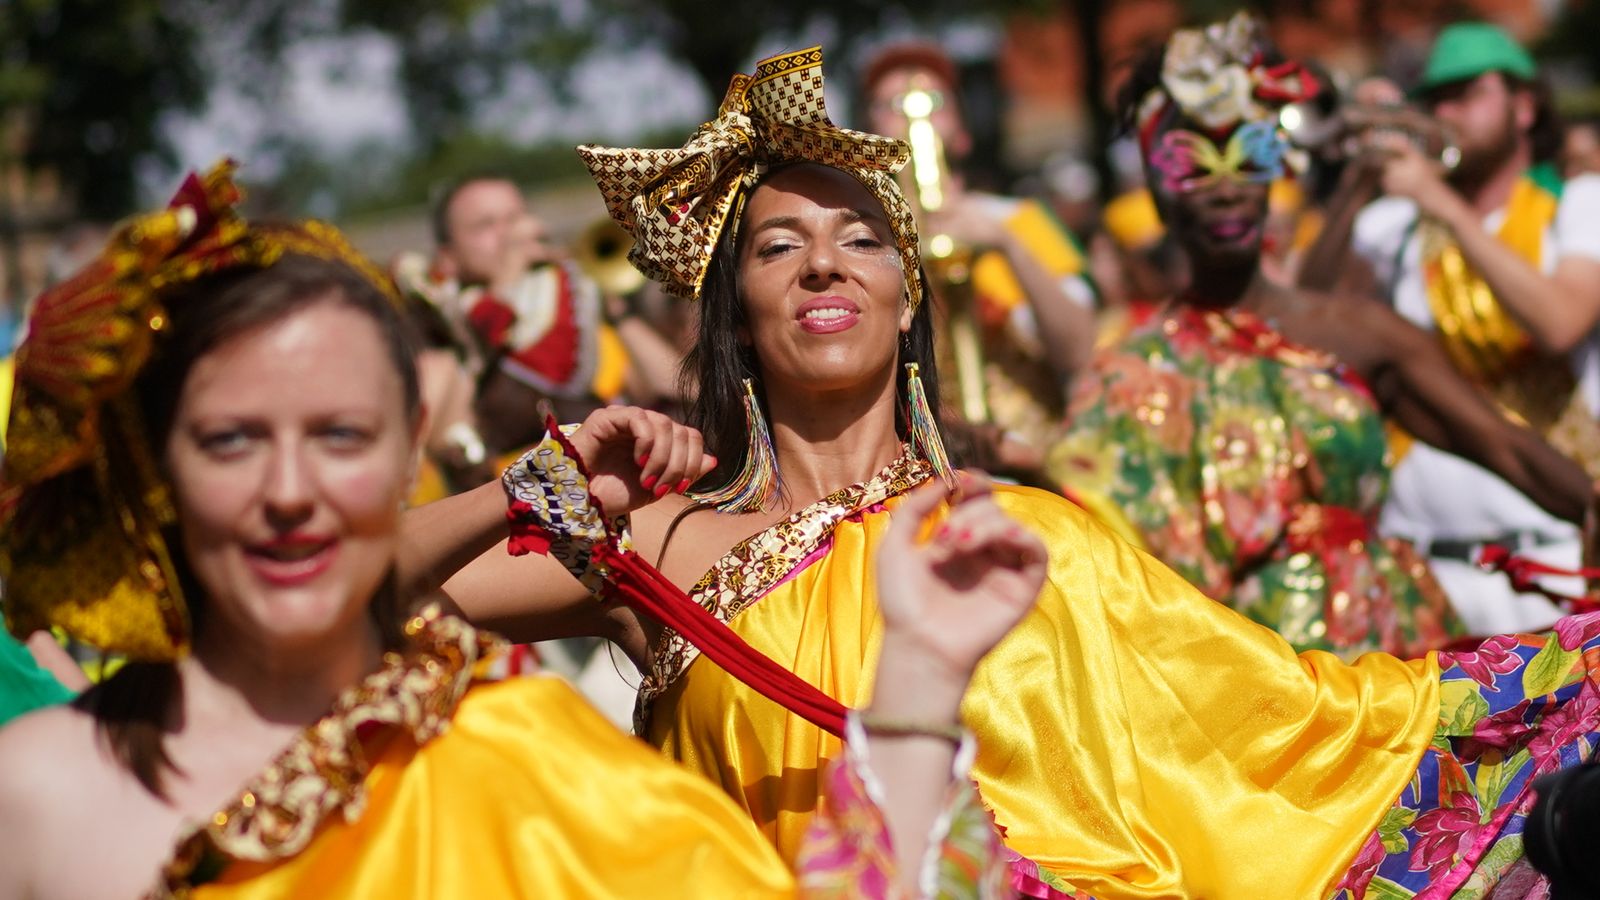 Carnival joy returns to West London | News UK Video News | Sky News